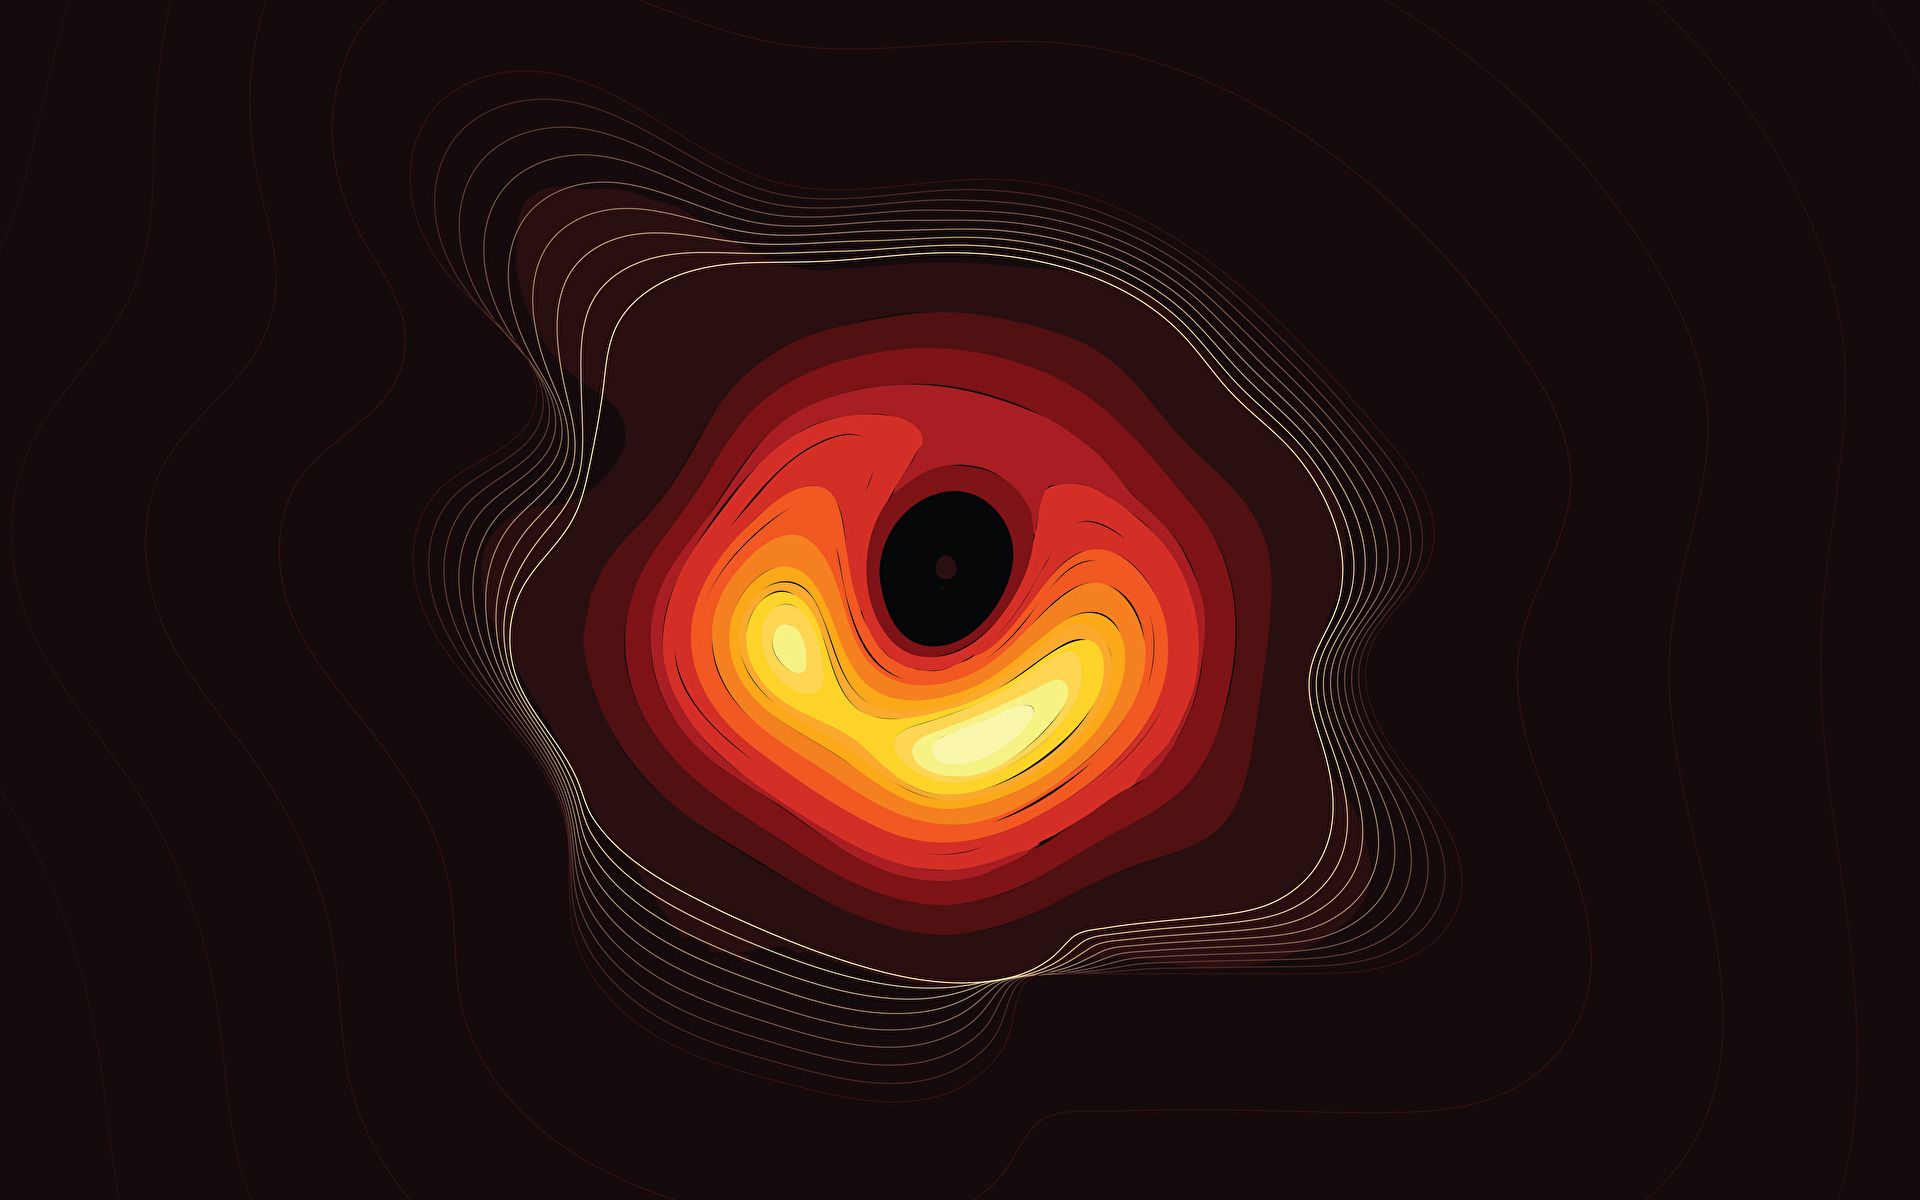 4K OLED Wallpaper of the M87 Black Hole